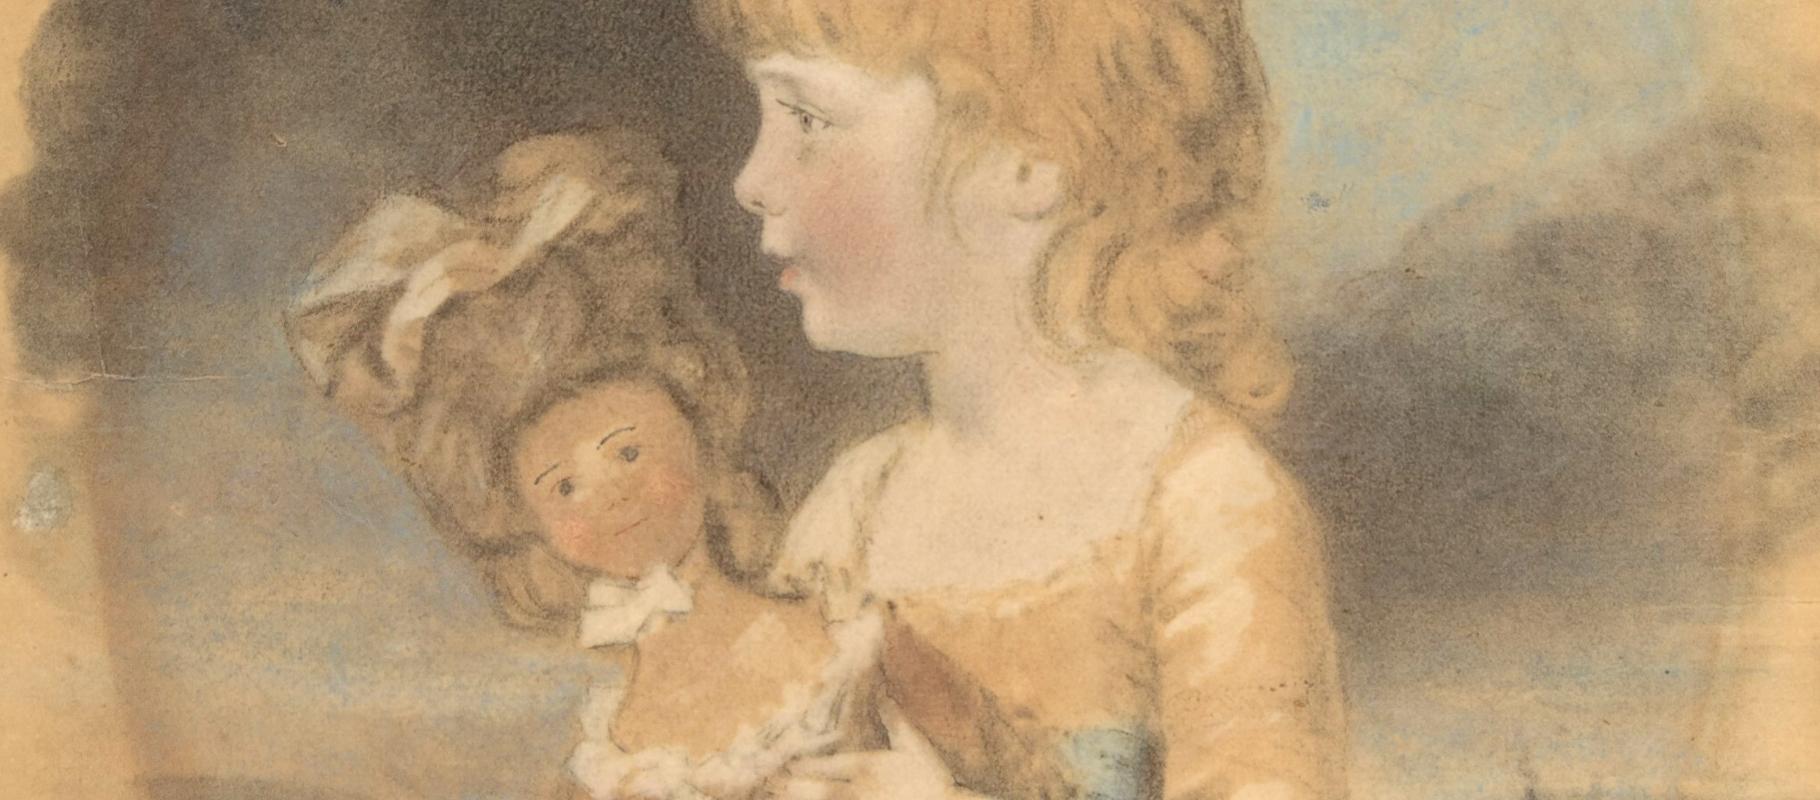 18th century girl doll